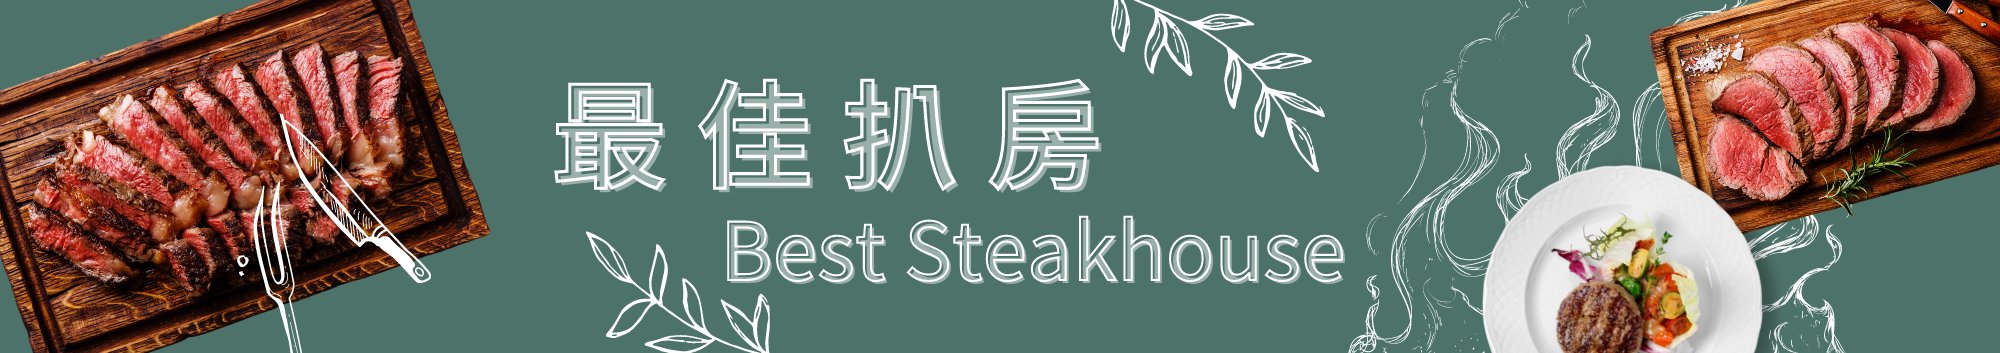 Best Steakhouse